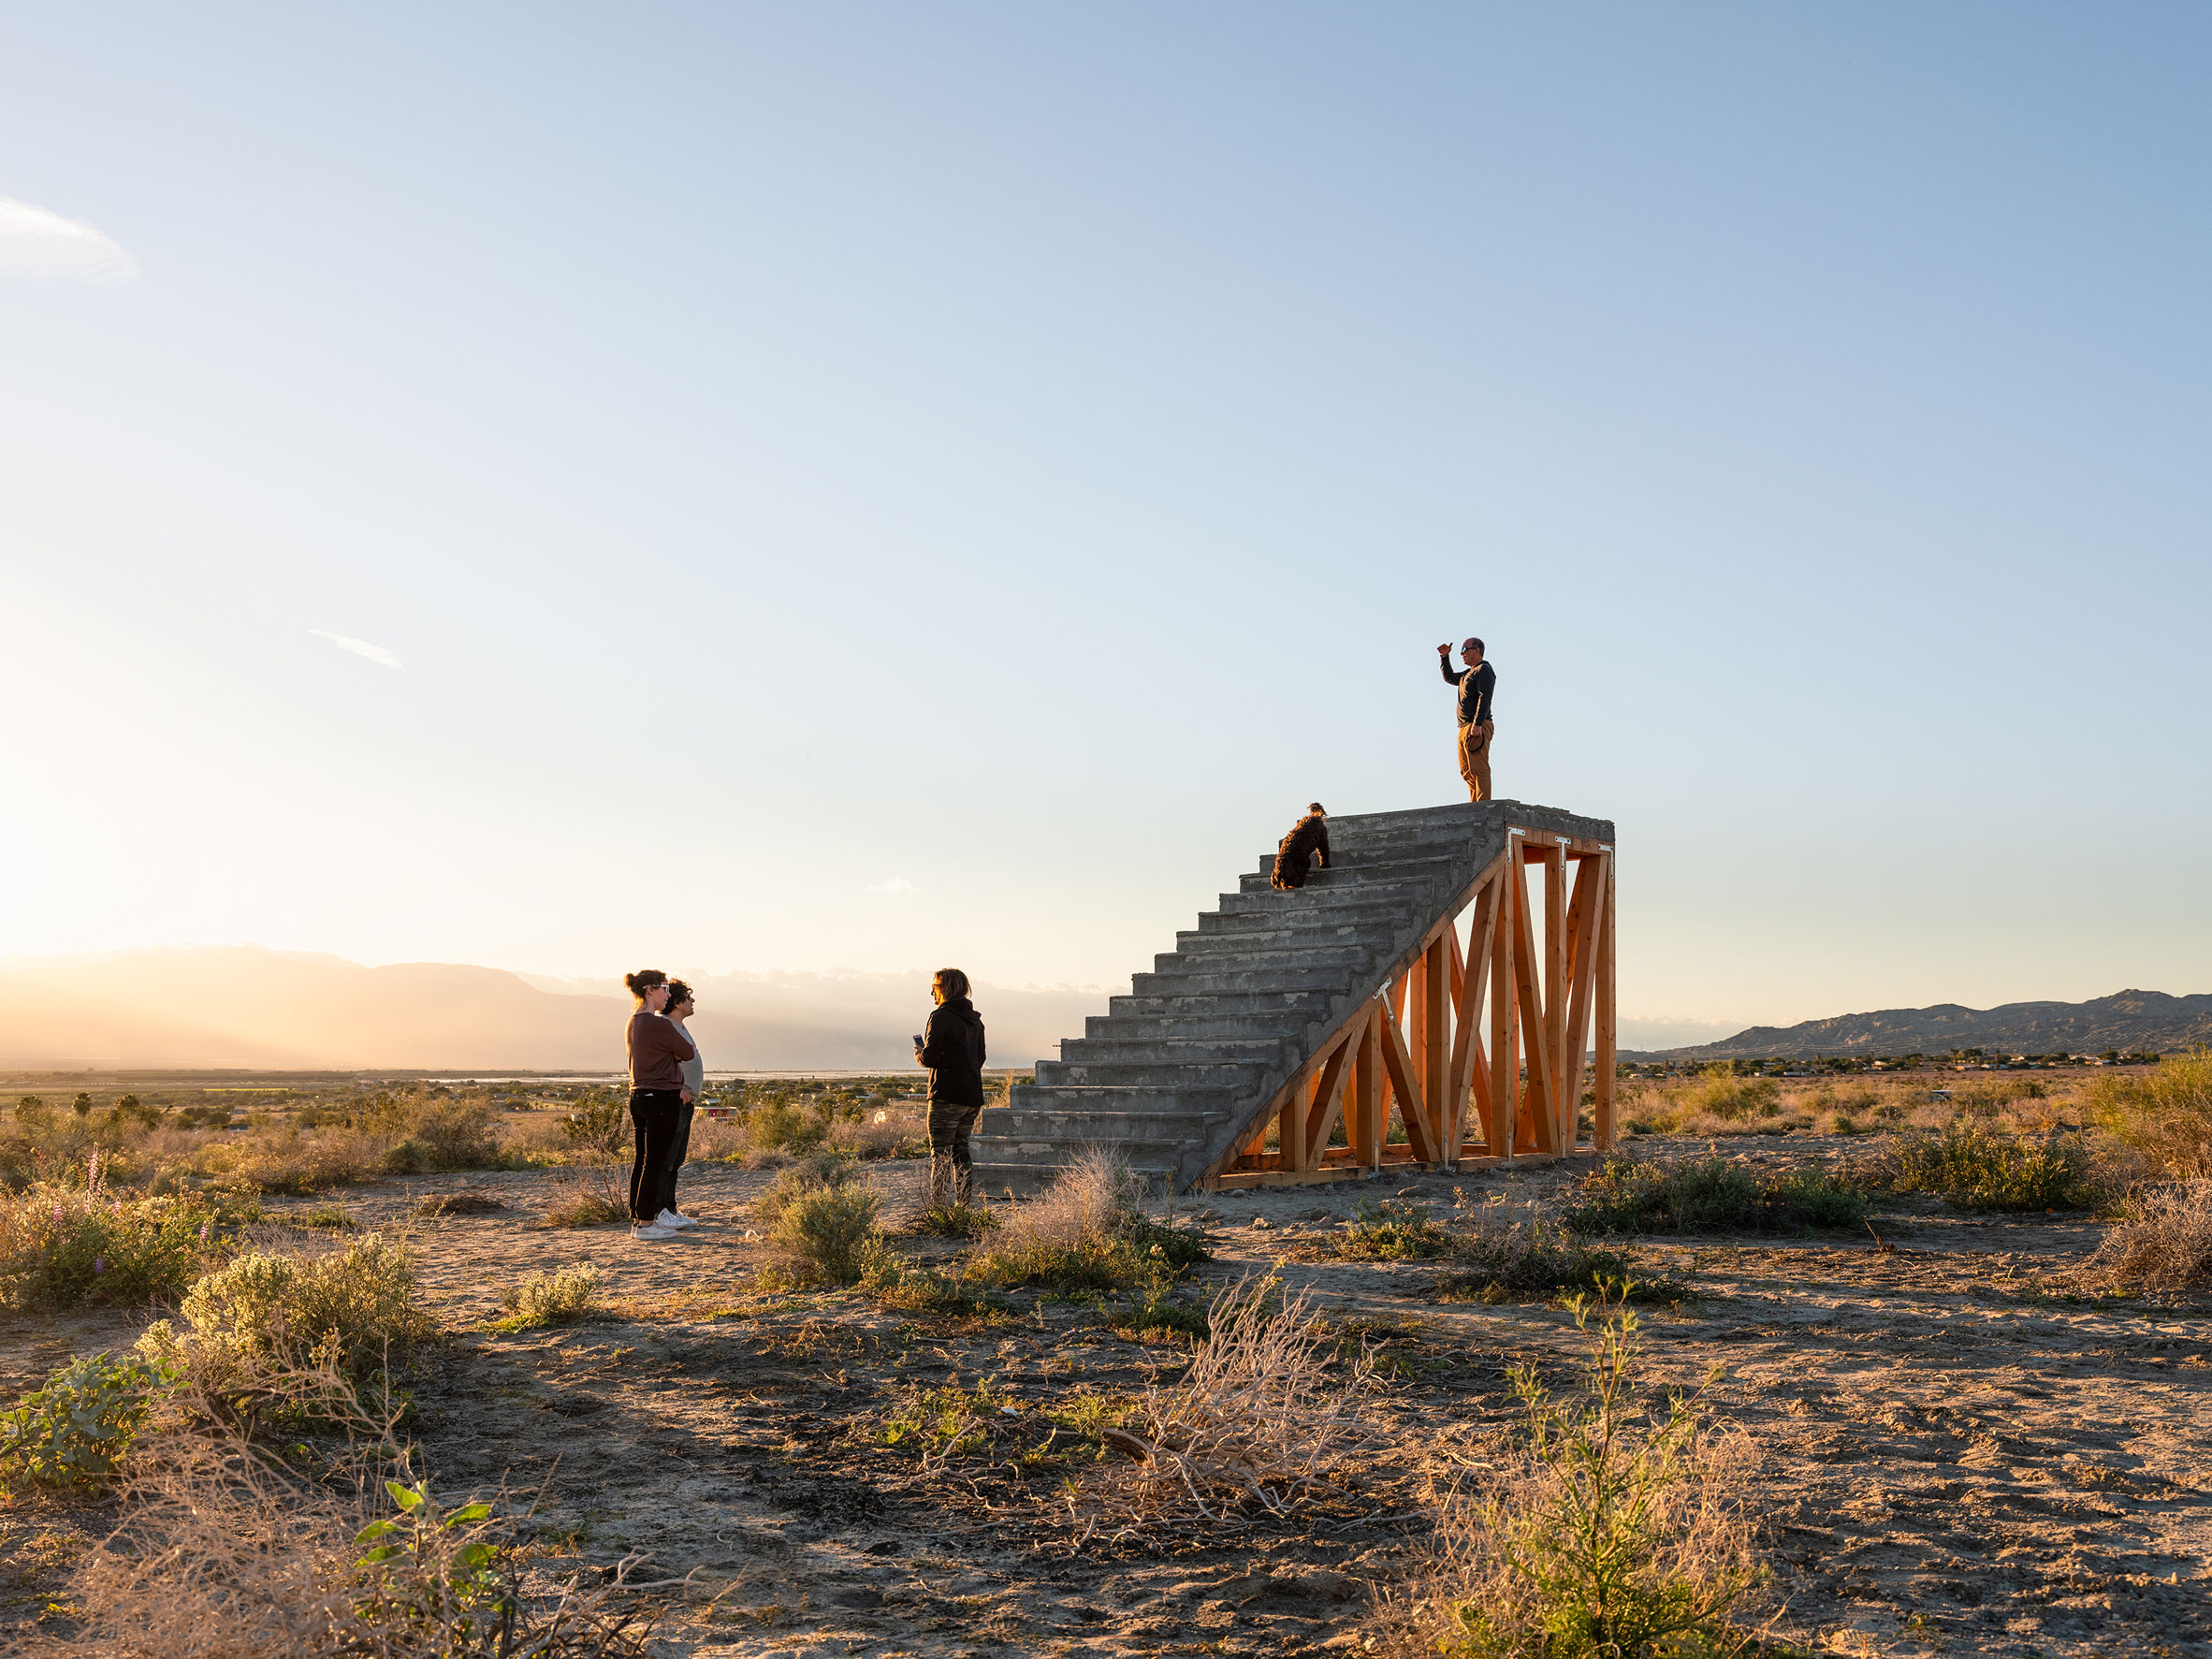 Ivan Argote's installation for Desert X 2019